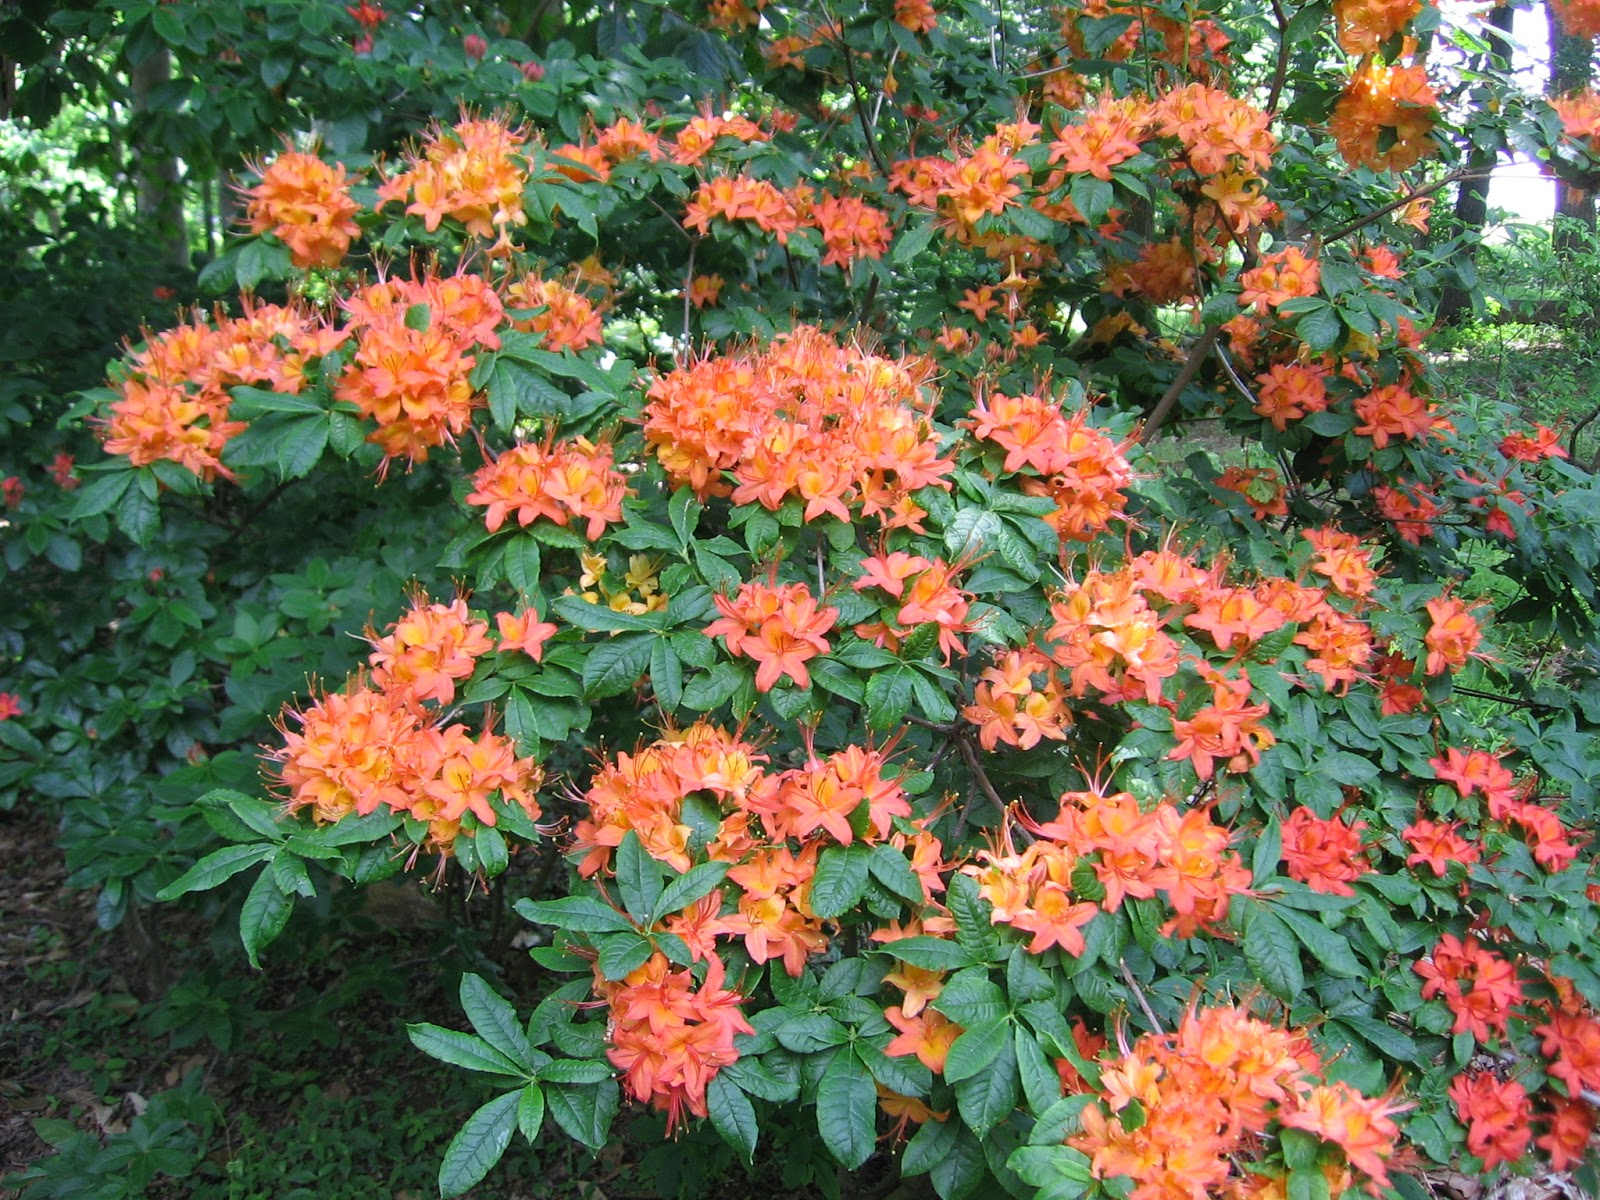 Rhododendron cumberlandense - Cumberland azalea care and culture